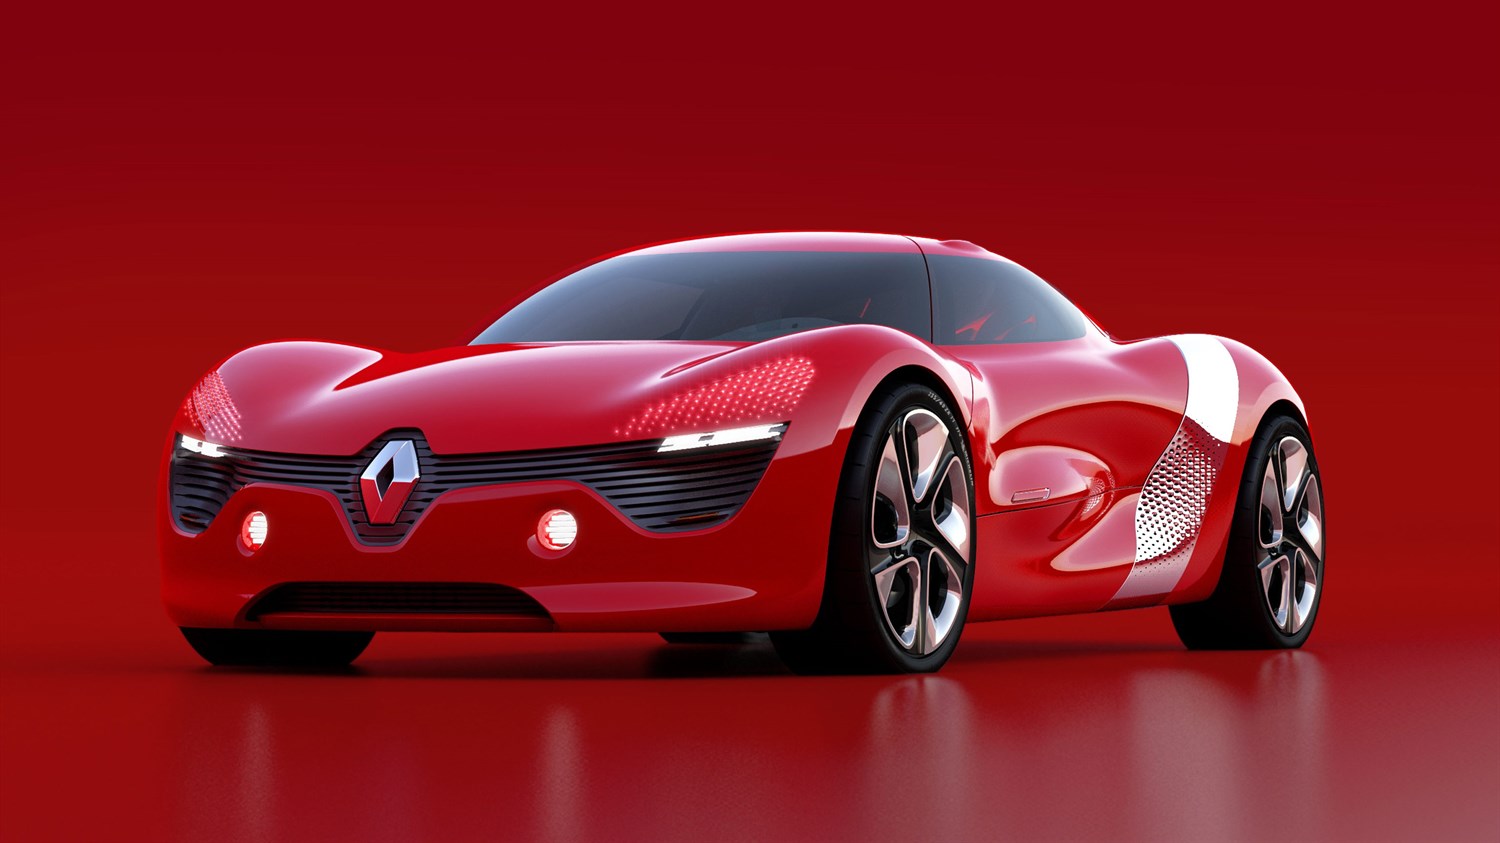 Renault DEZIR concept car dynamic design